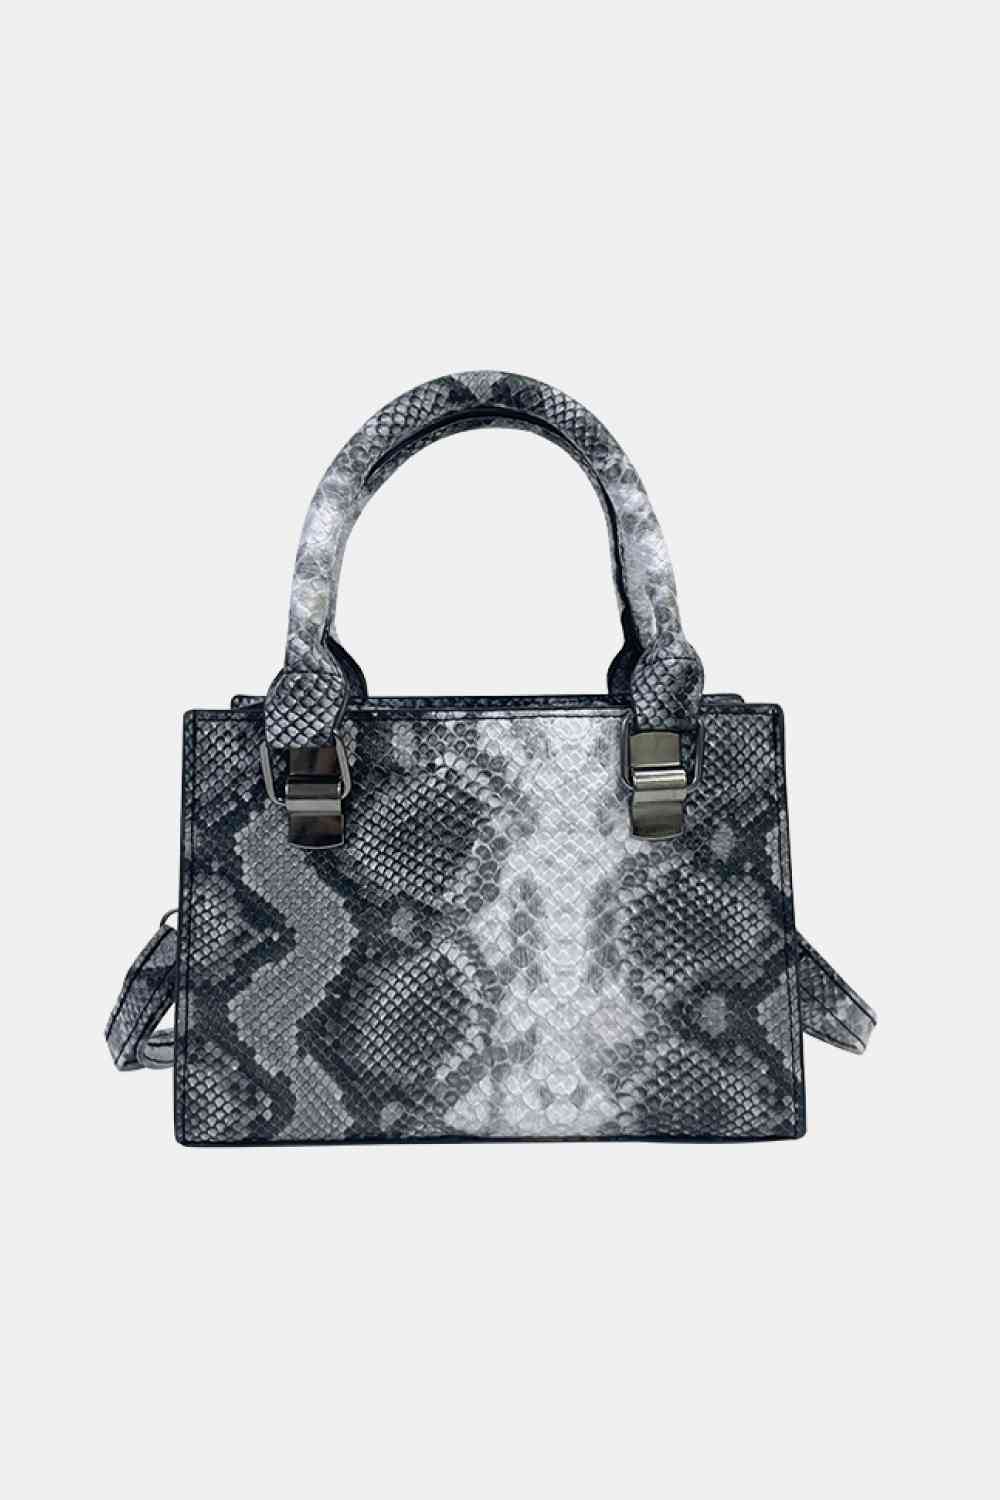 TEEK - Snakeskin Print PU Leather Handbag BAG TEEK Trend Charcoal  